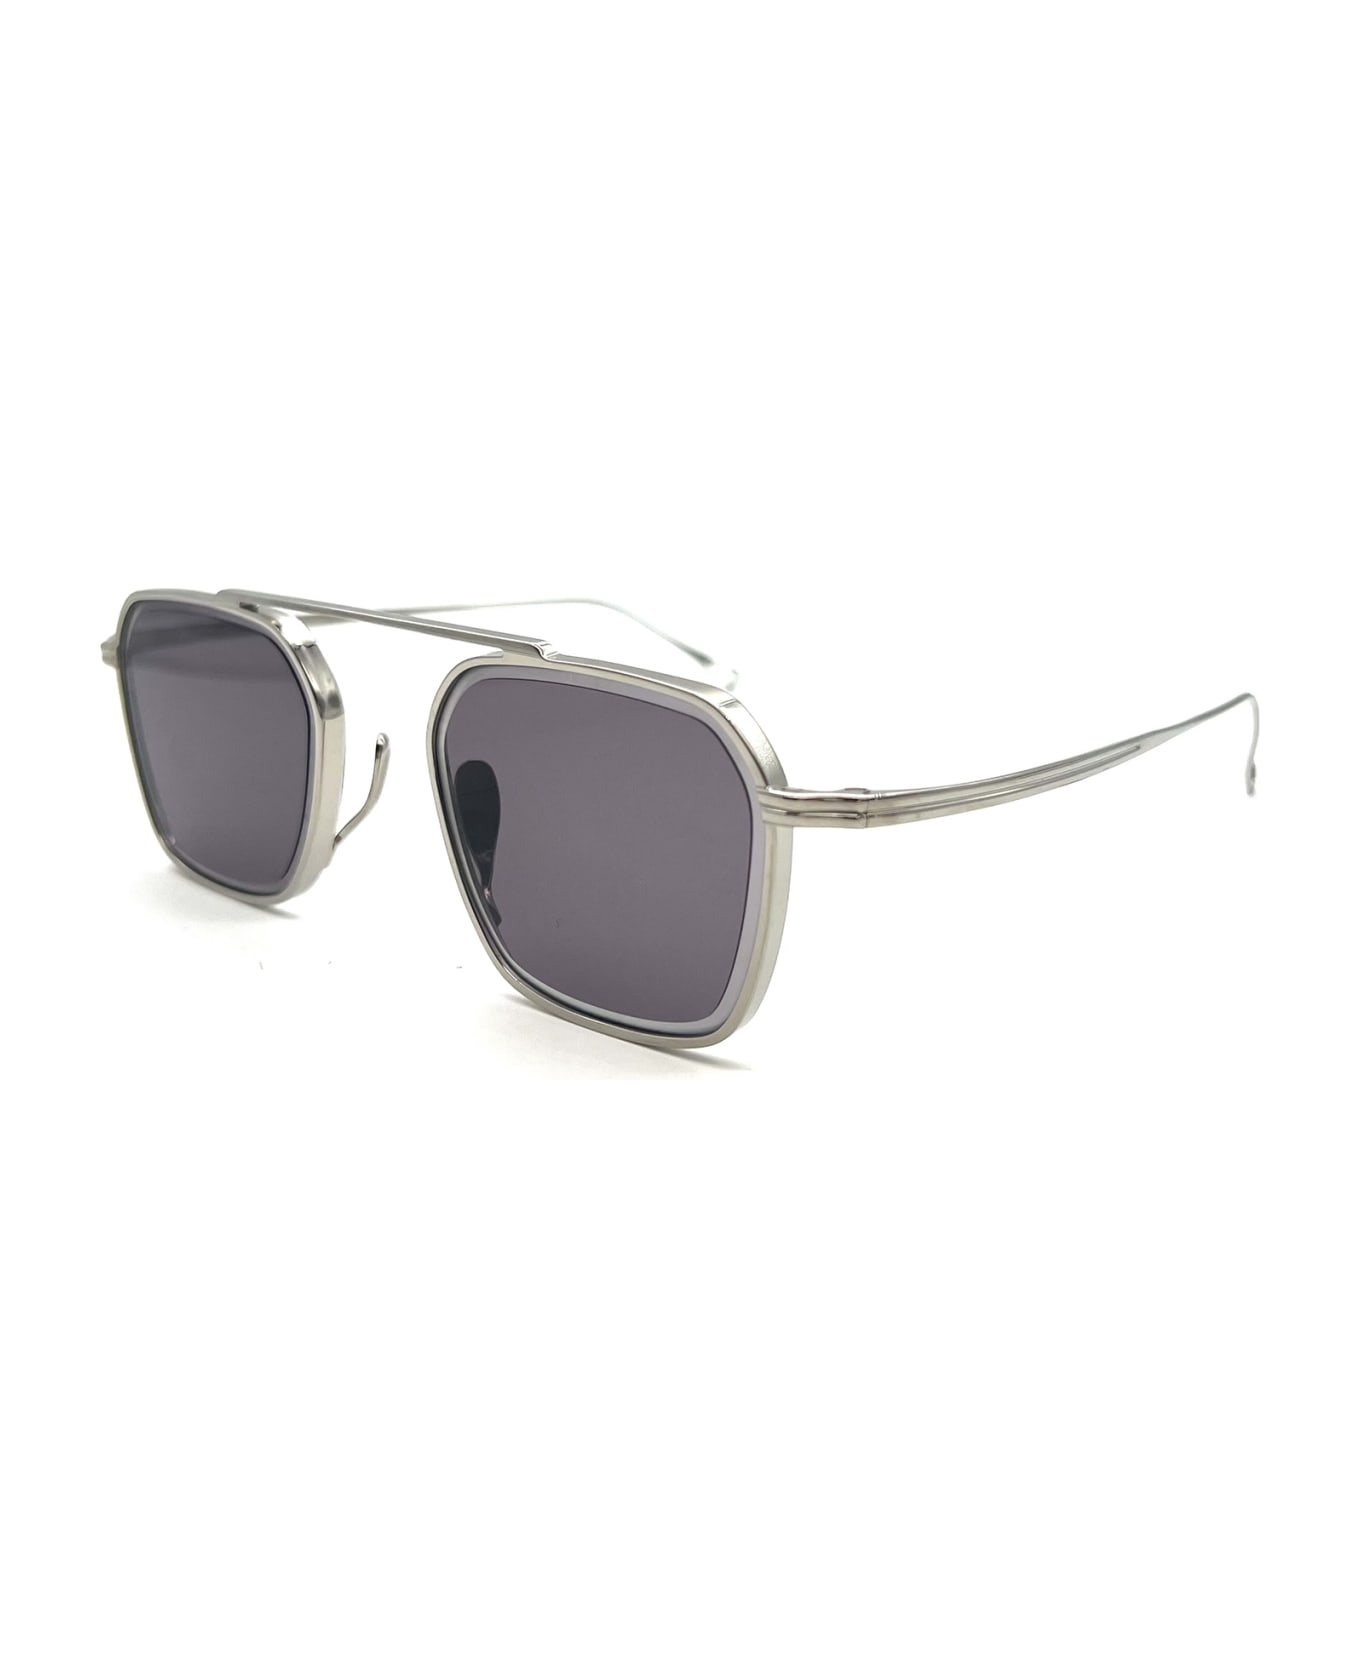 KameManNen SG KMN 9502 Sunglasses - Ts サングラス